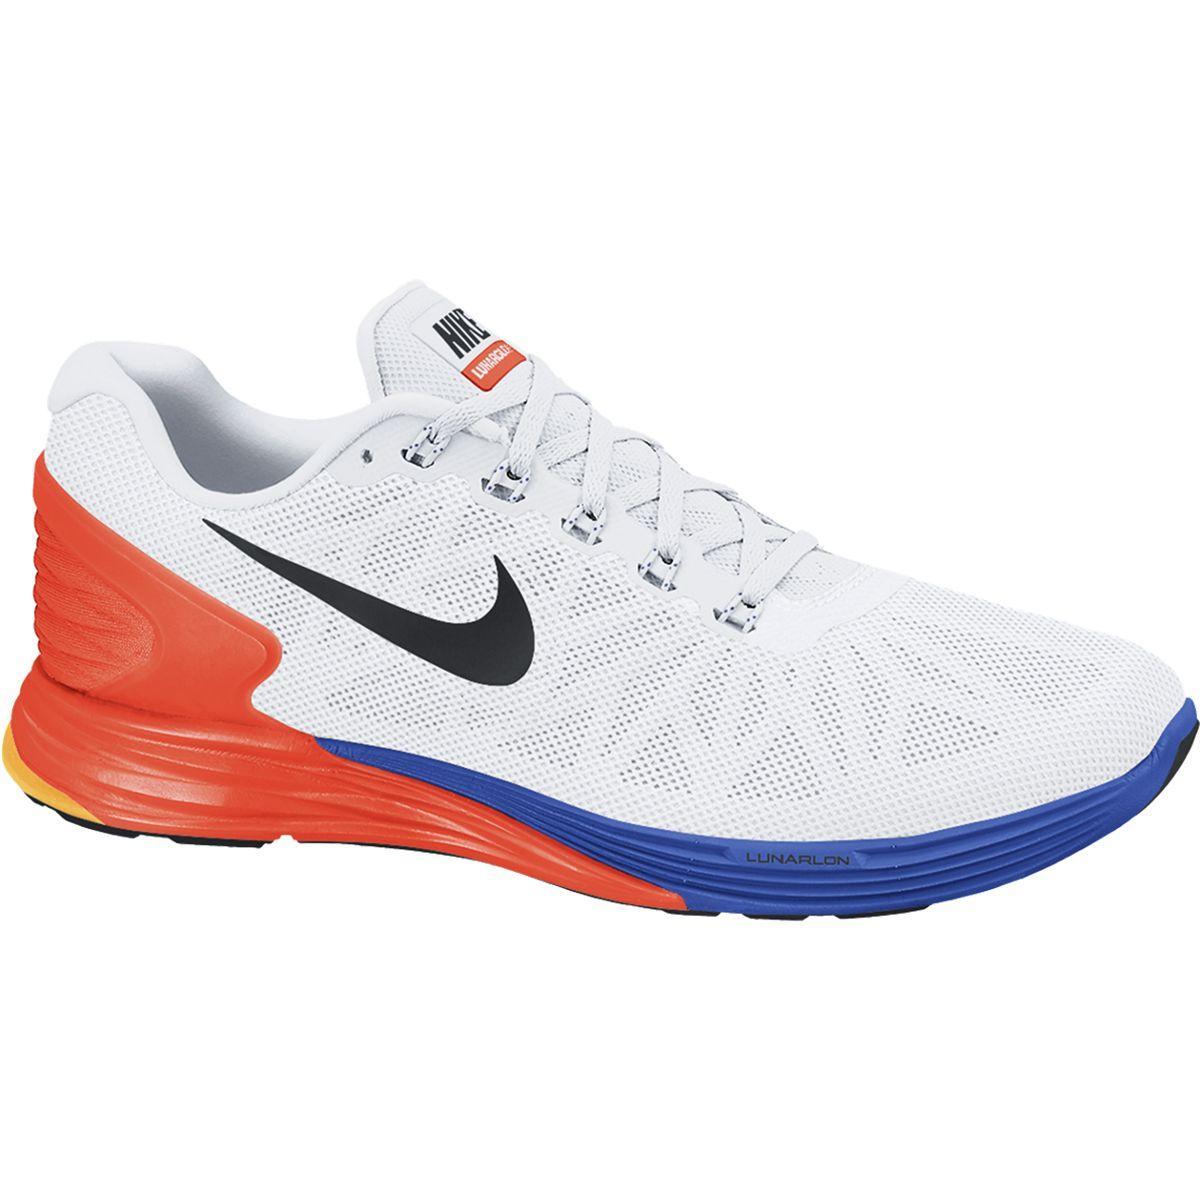 Nike Mens LunarGlide 6 Running Shoes - White/Black - Tennisnuts.com